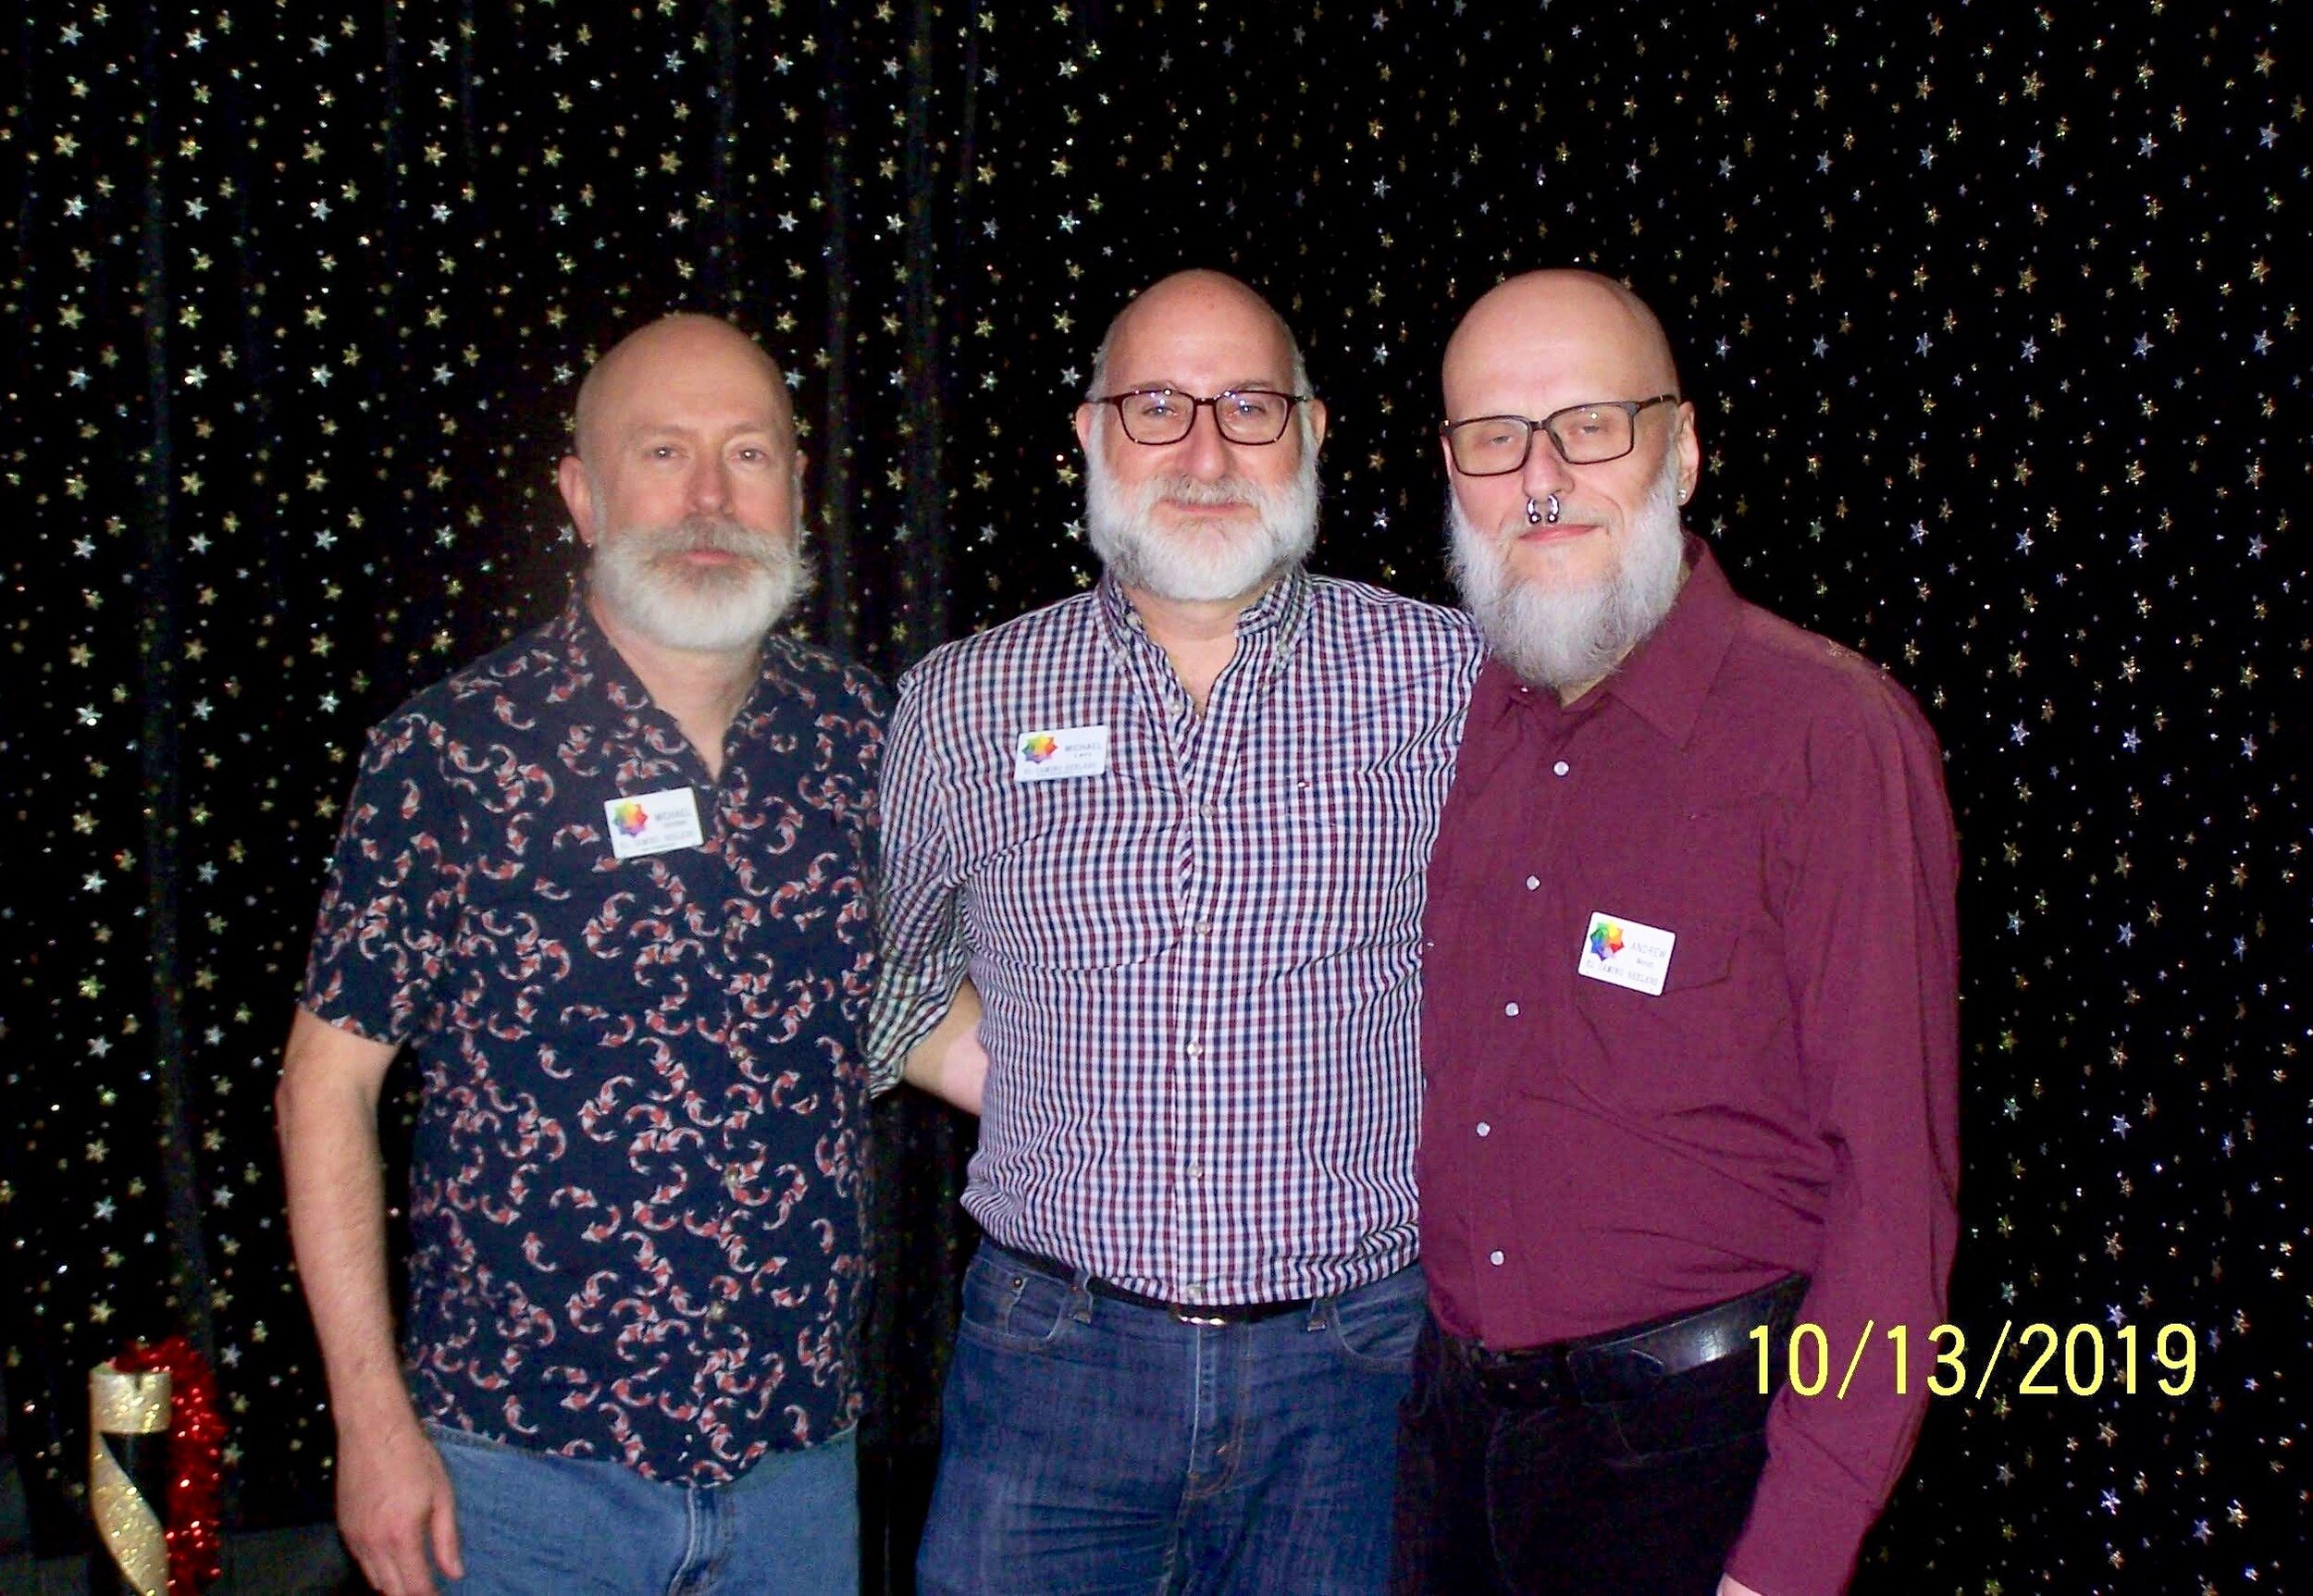   Michael Golden, Michael Levy and Andrew Mondt  